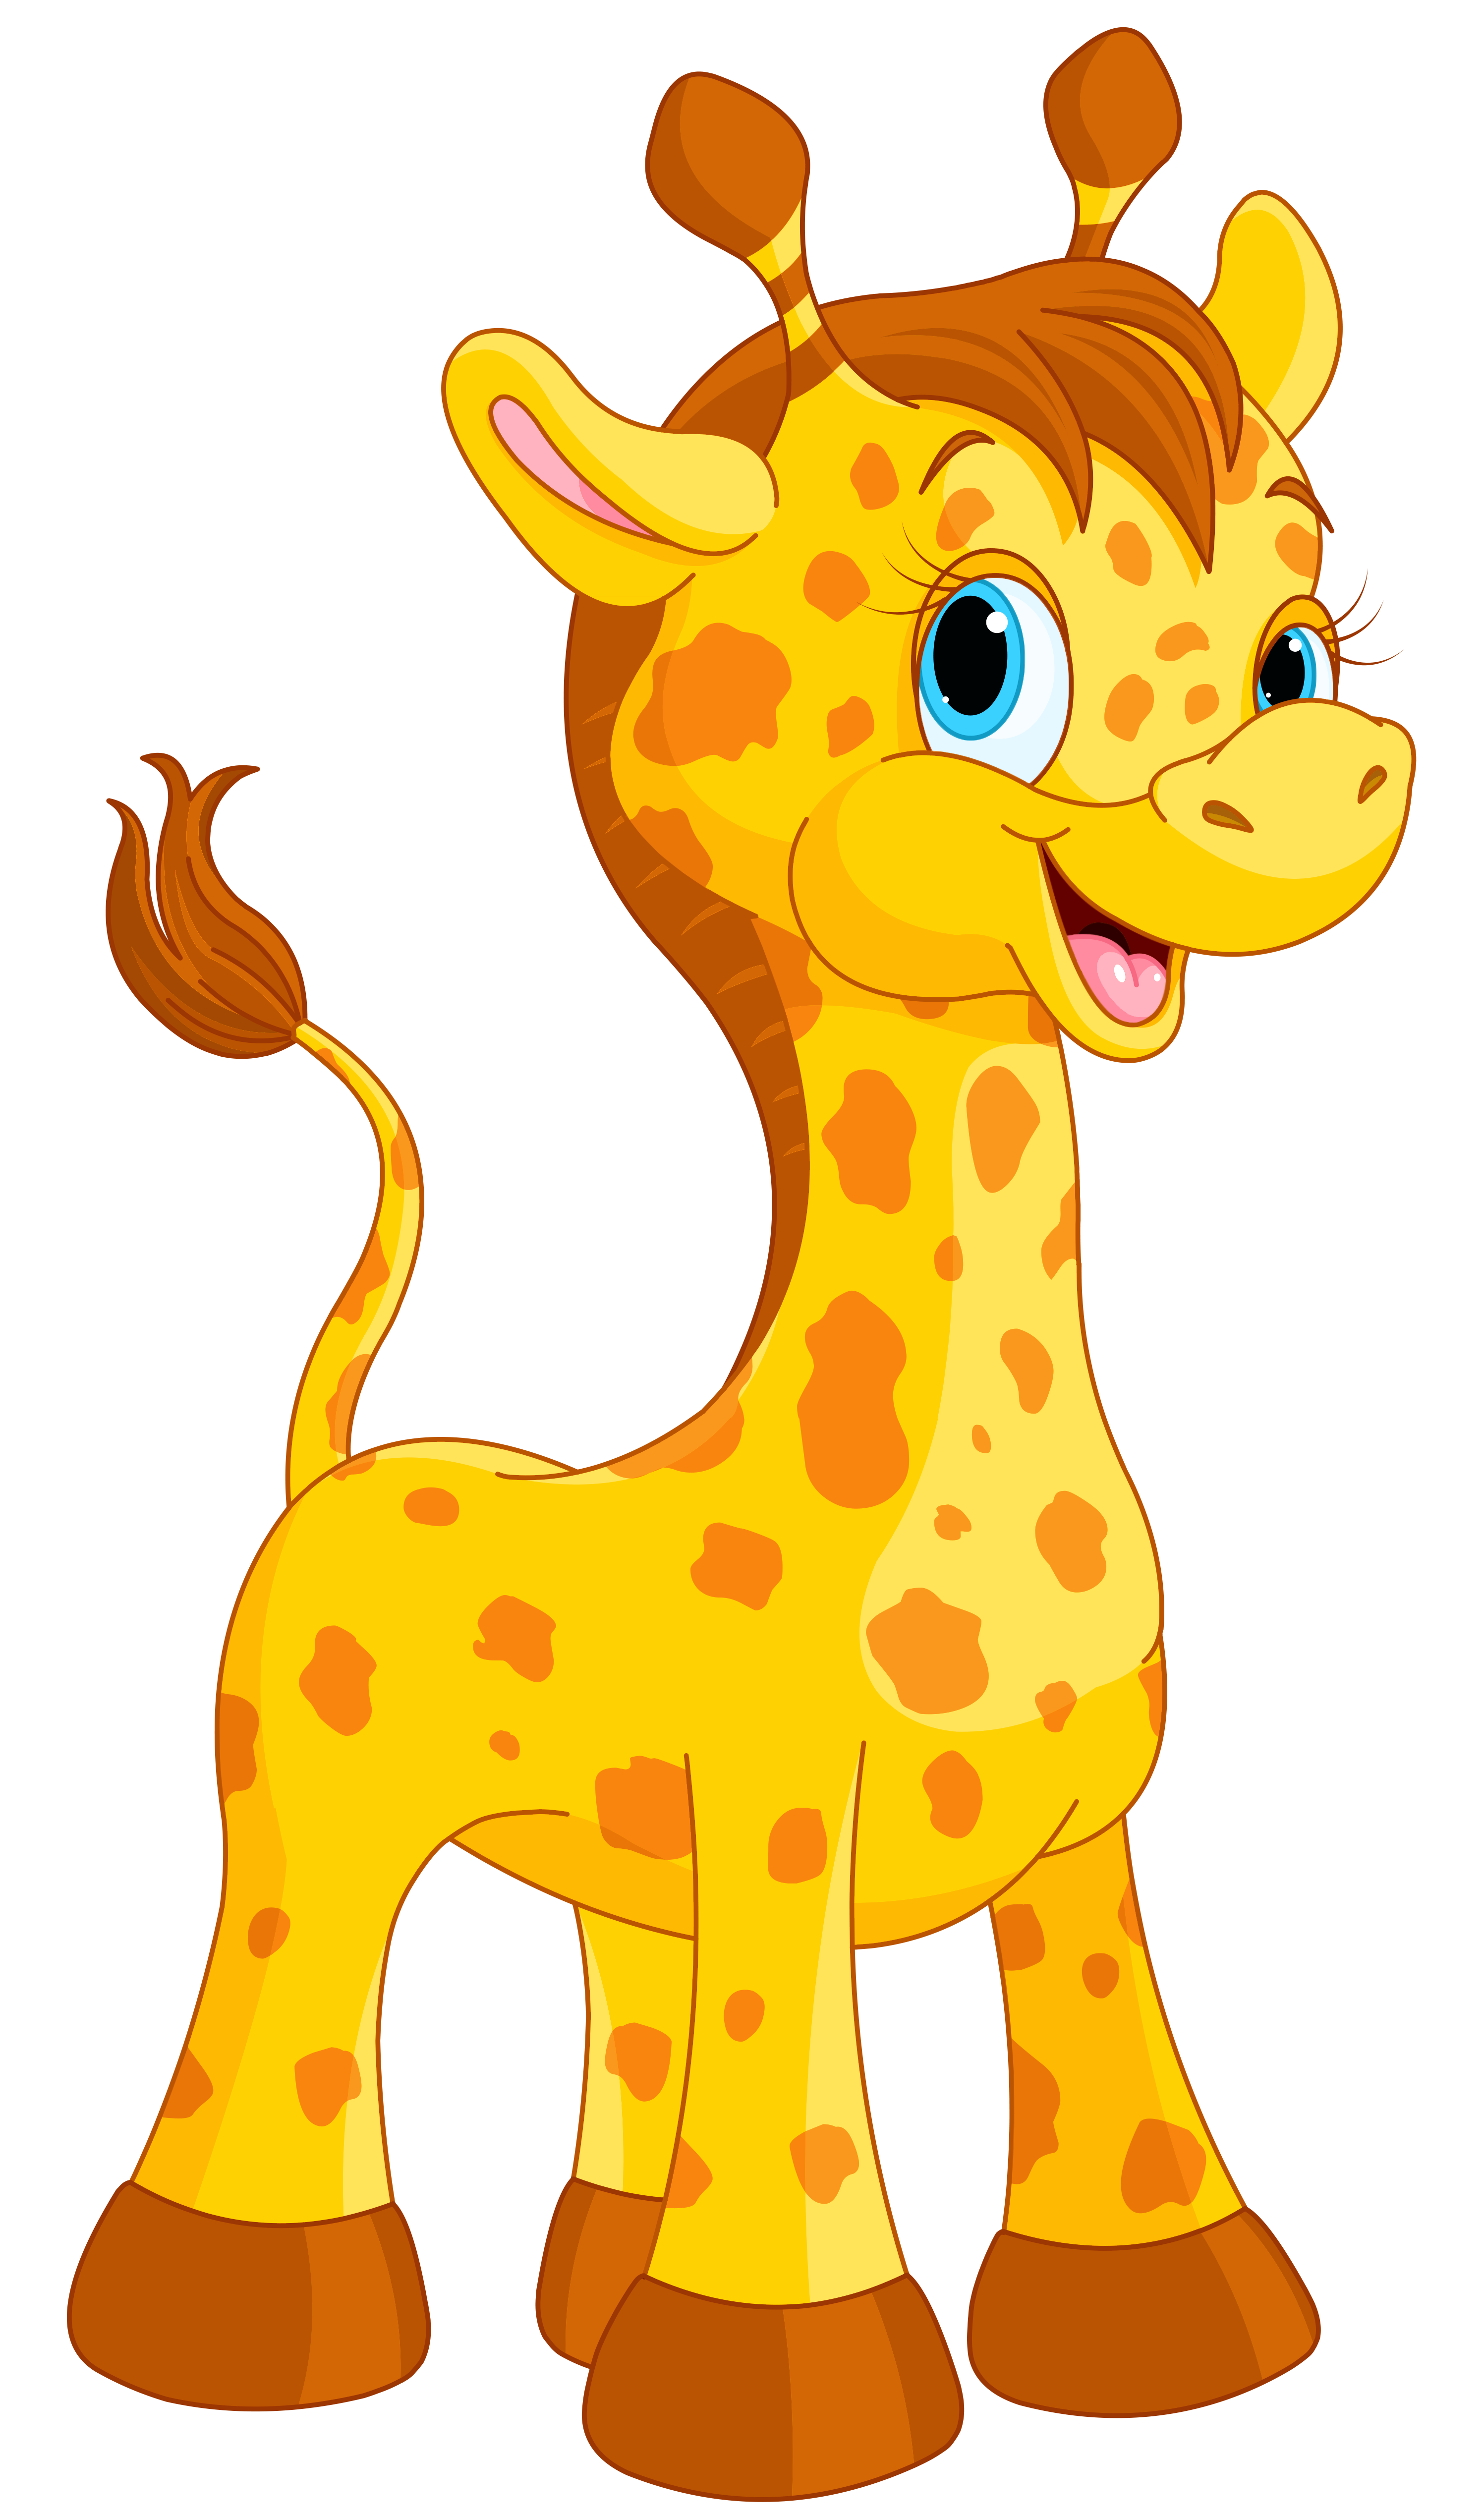 Spiderweb clipart animated. Cute giraffe cartoon png